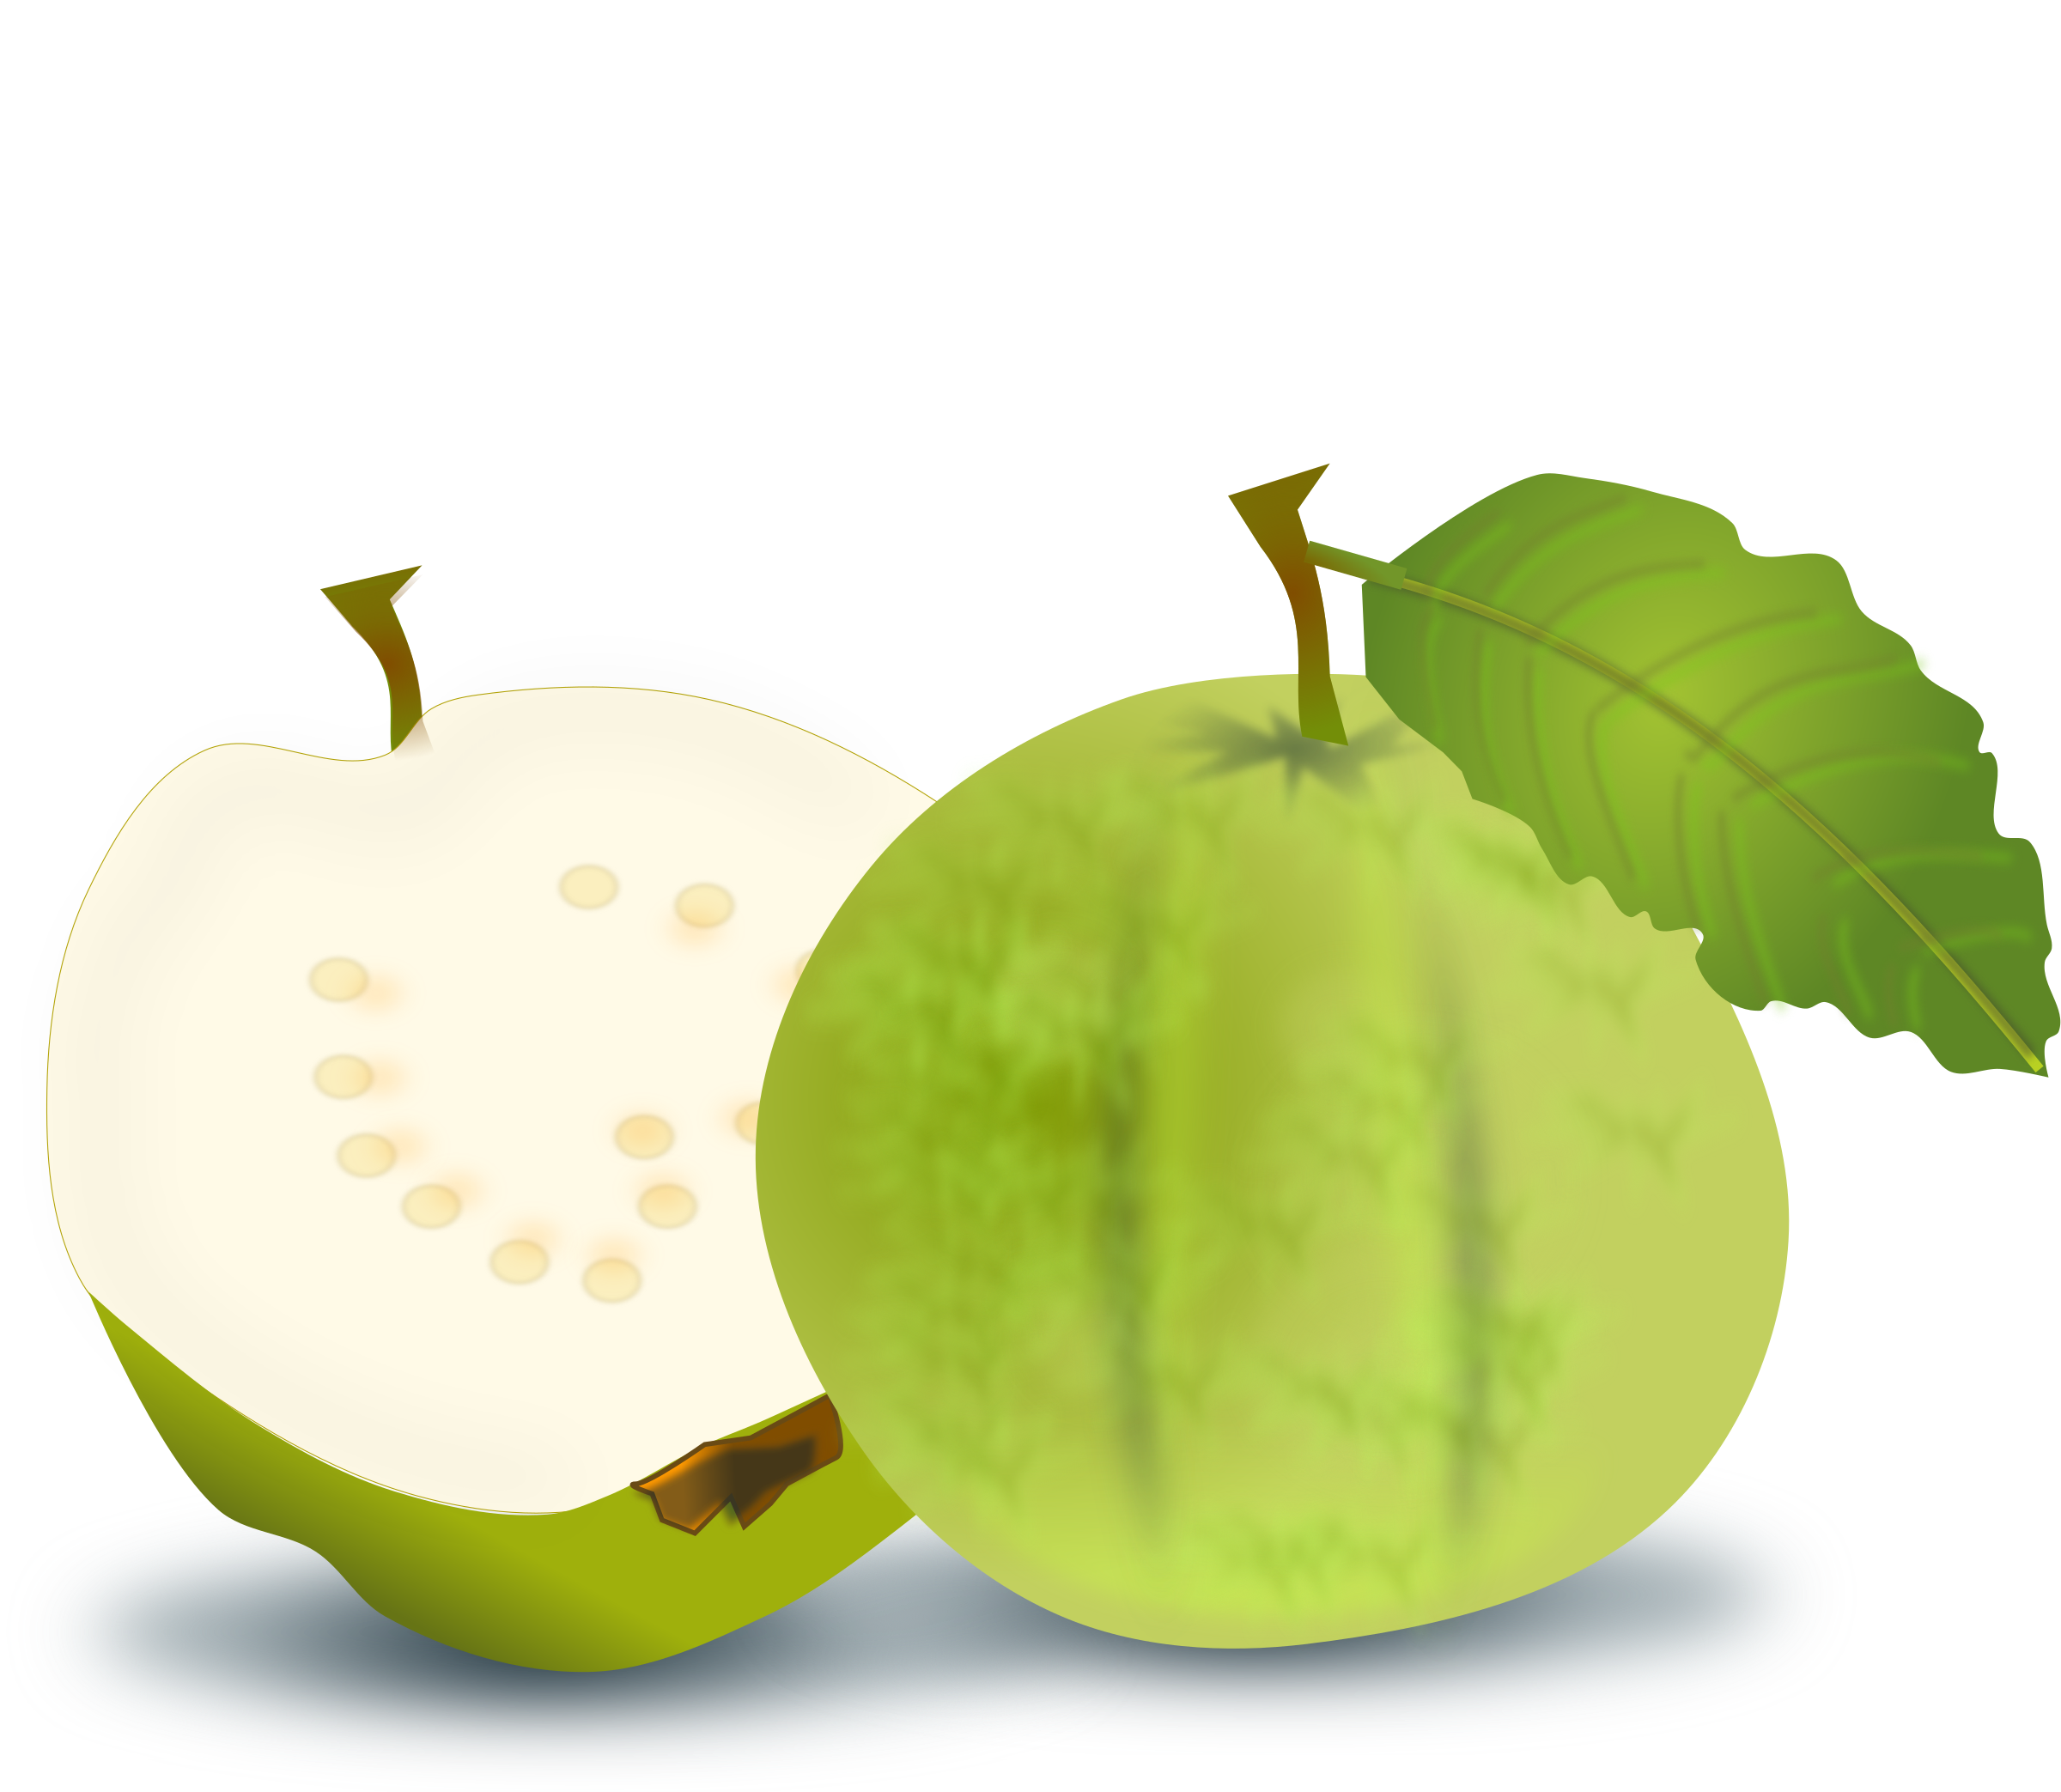 Big Image (Png) - Guava, Transparent background PNG HD thumbnail